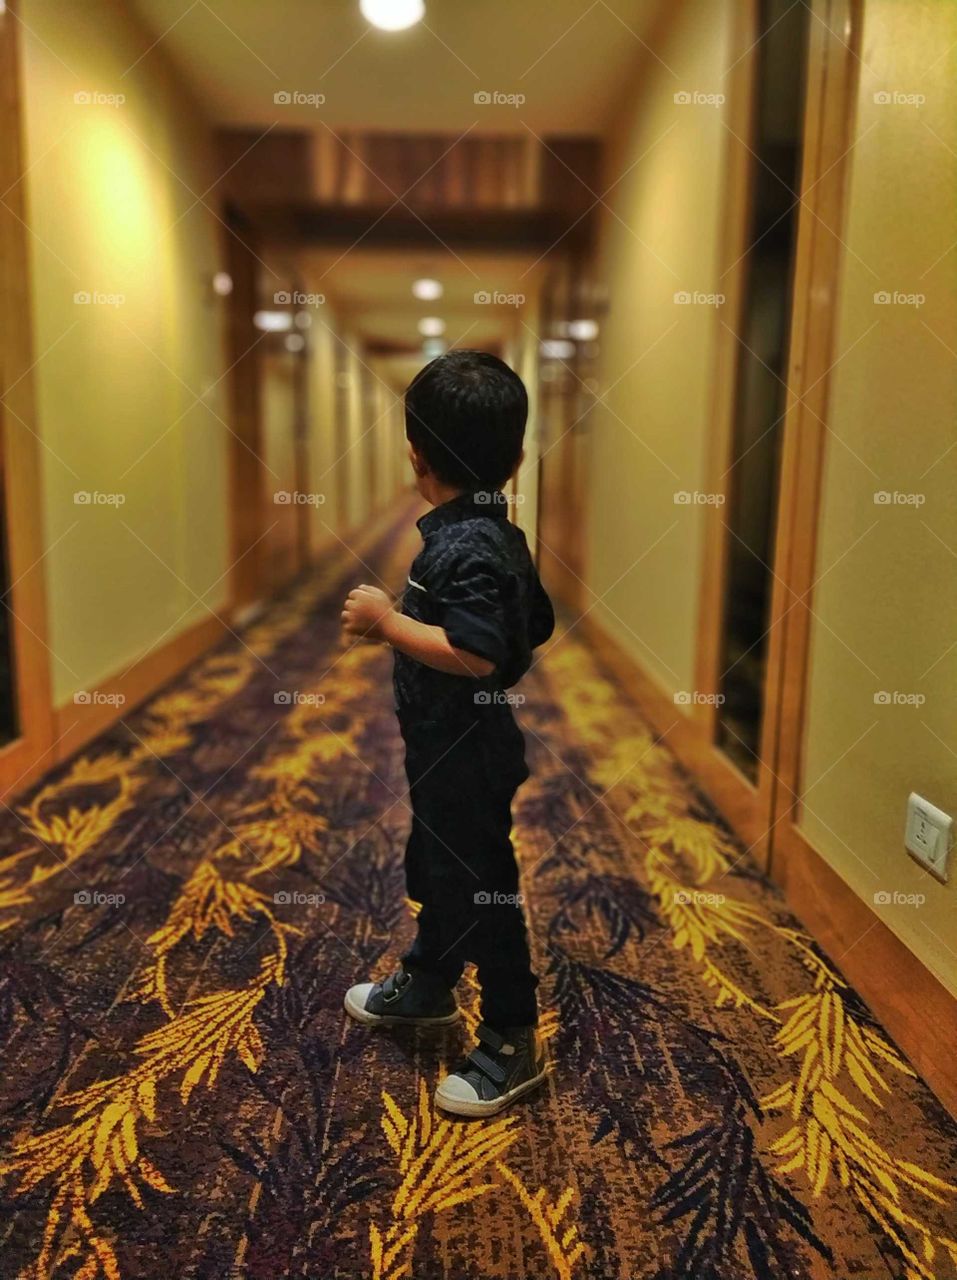 Radisson Blu hotel Pune India. Dated 25th November 2018.
Instagram: shafiggue.k